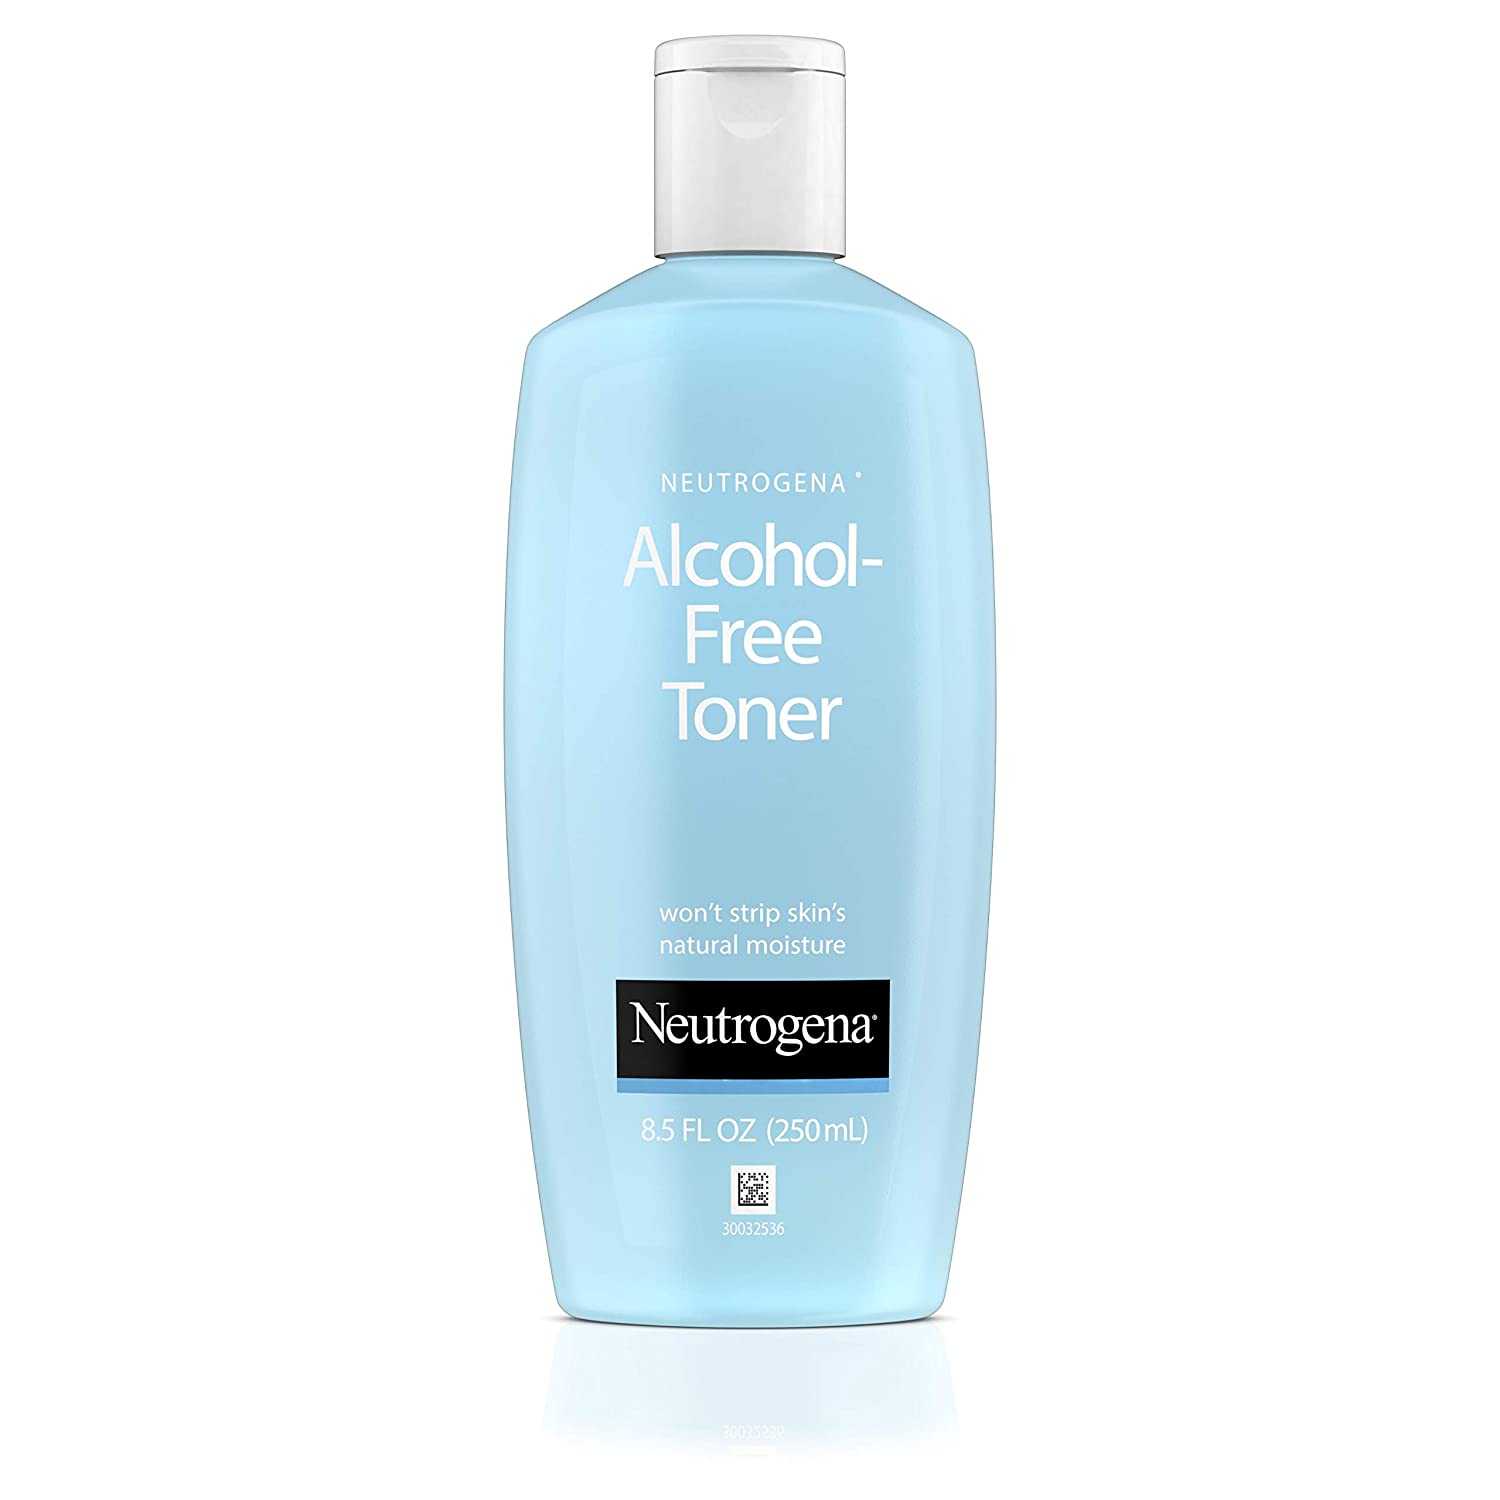 Neutrogena Alcohol-Free Toner For Oily Skin - Toner for oily skin